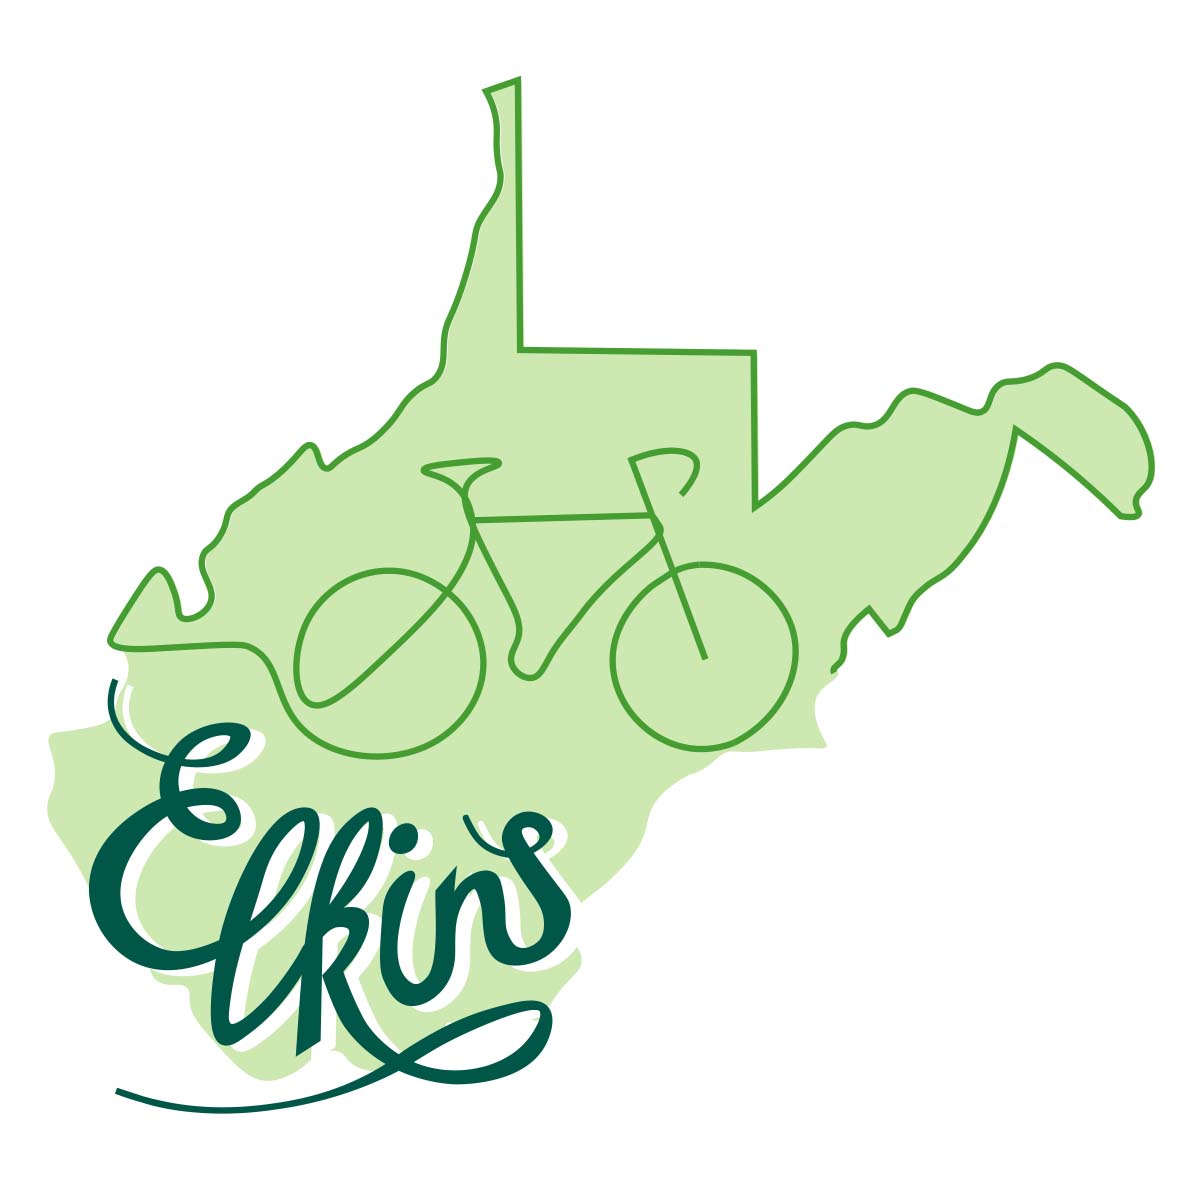 Elkins outdoor recreation logo variation